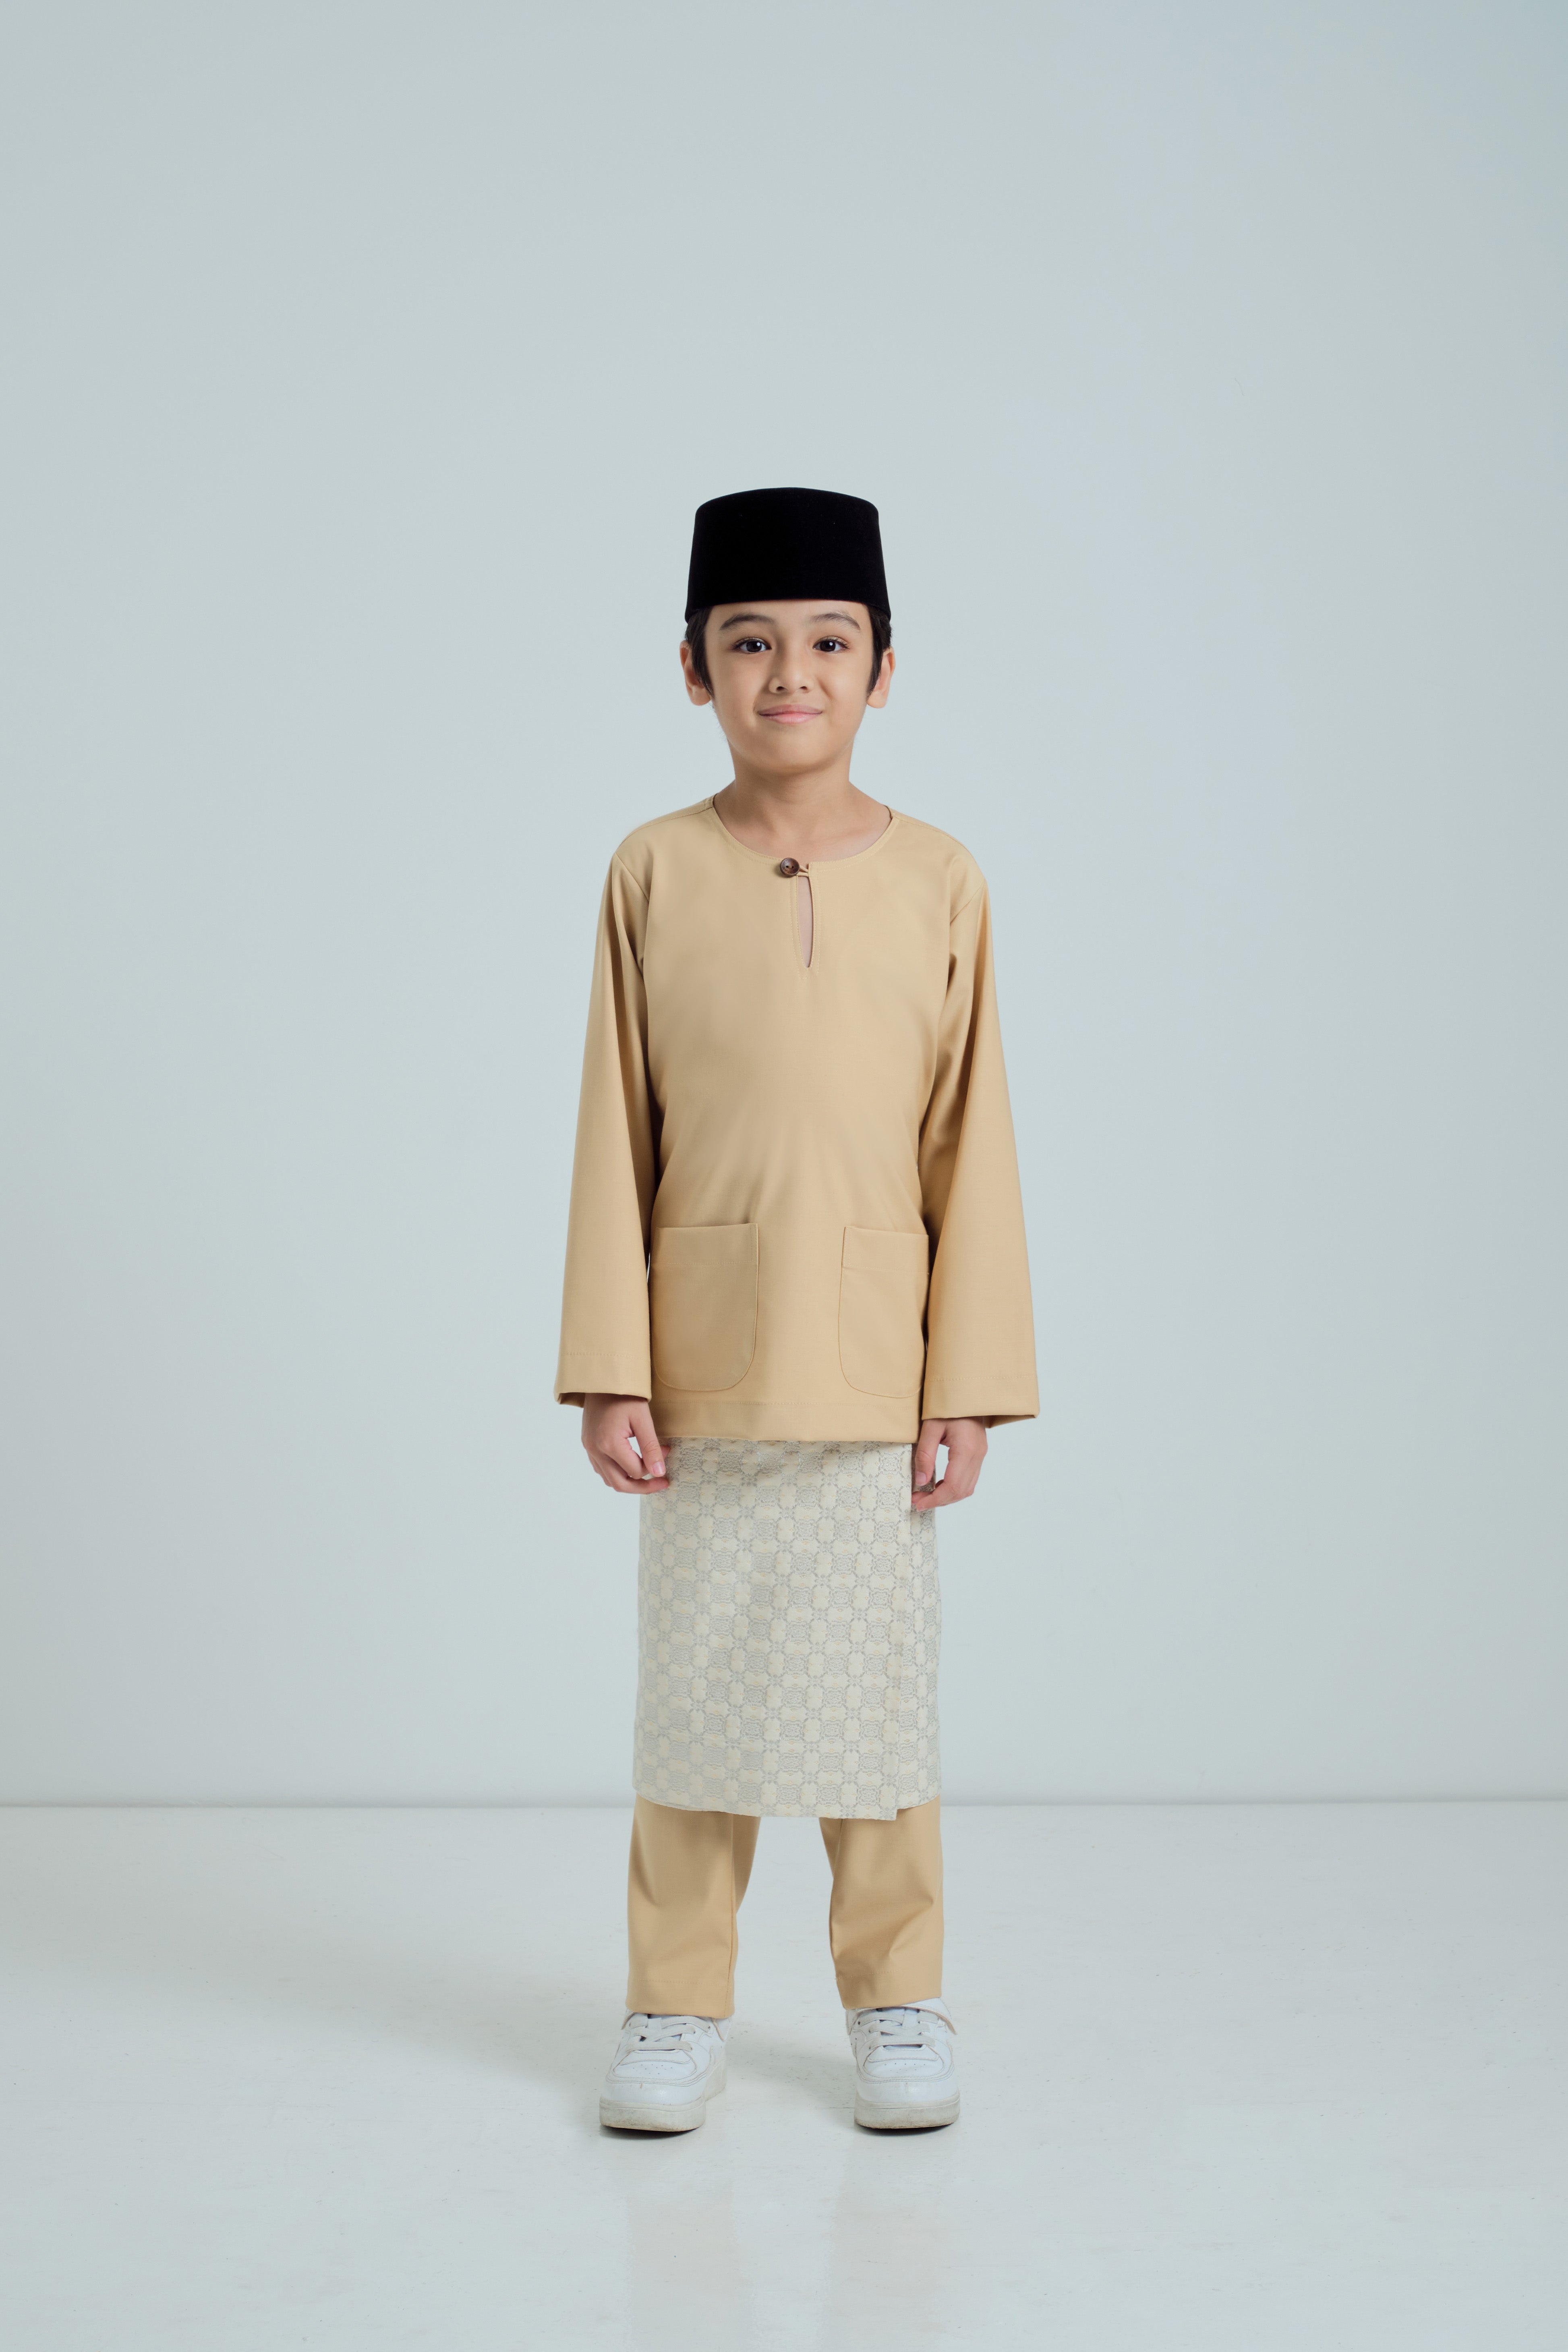 Patawali Boys Baju Melayu Teluk Belanga - Golden Rod